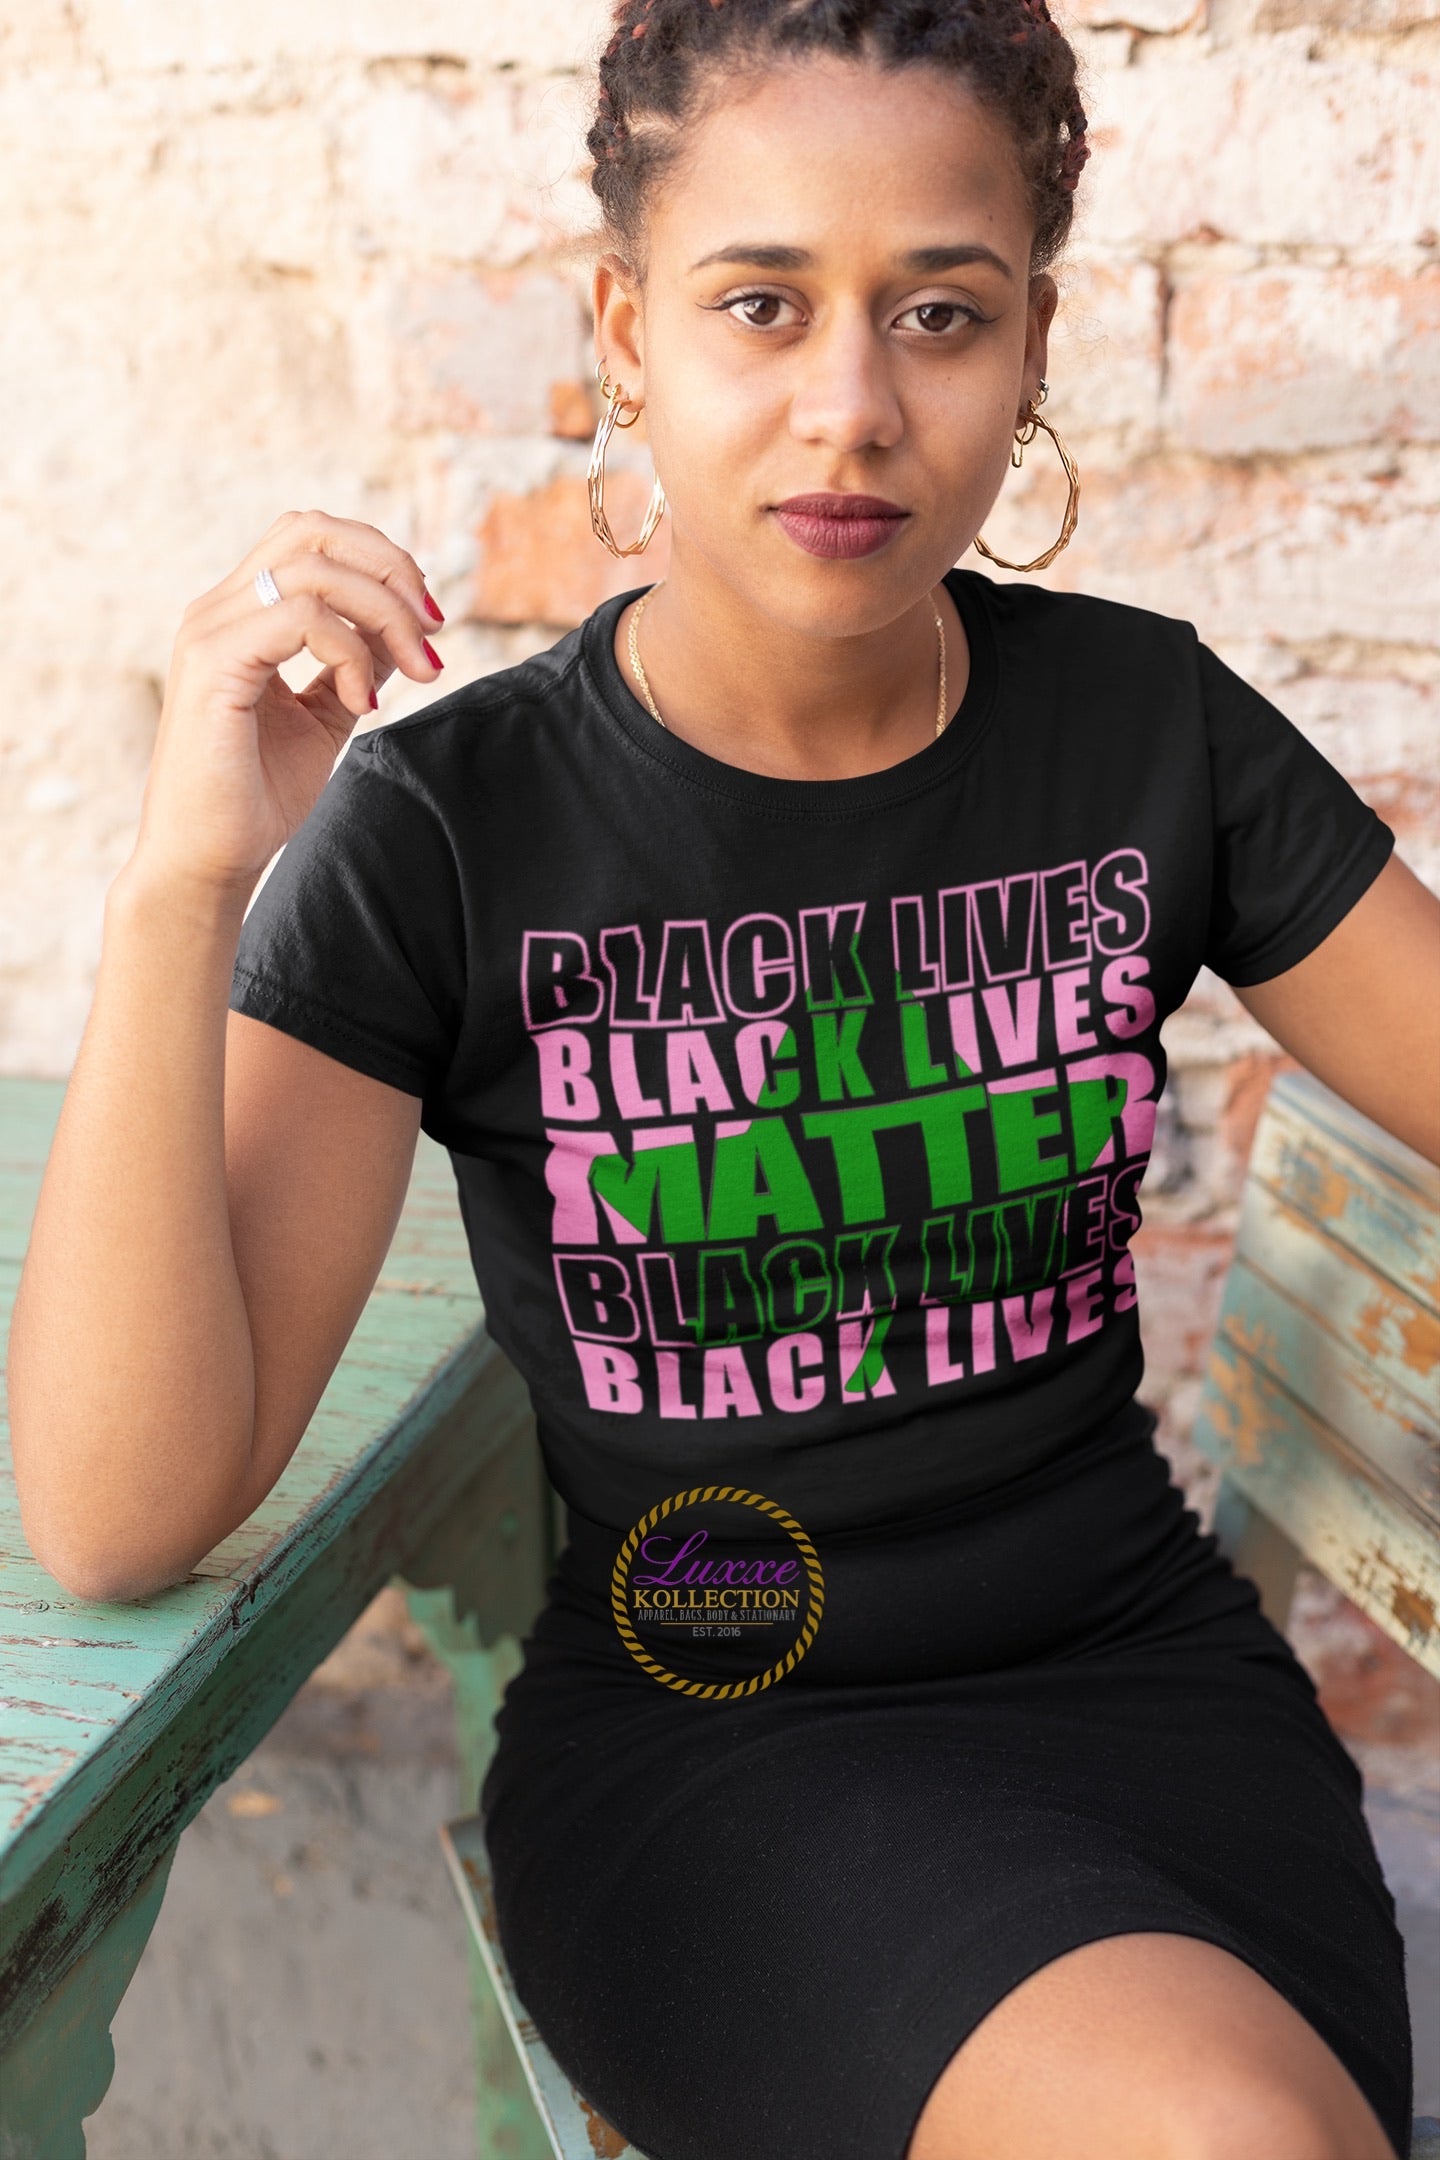 AKA Black Lives Matter T-shirt